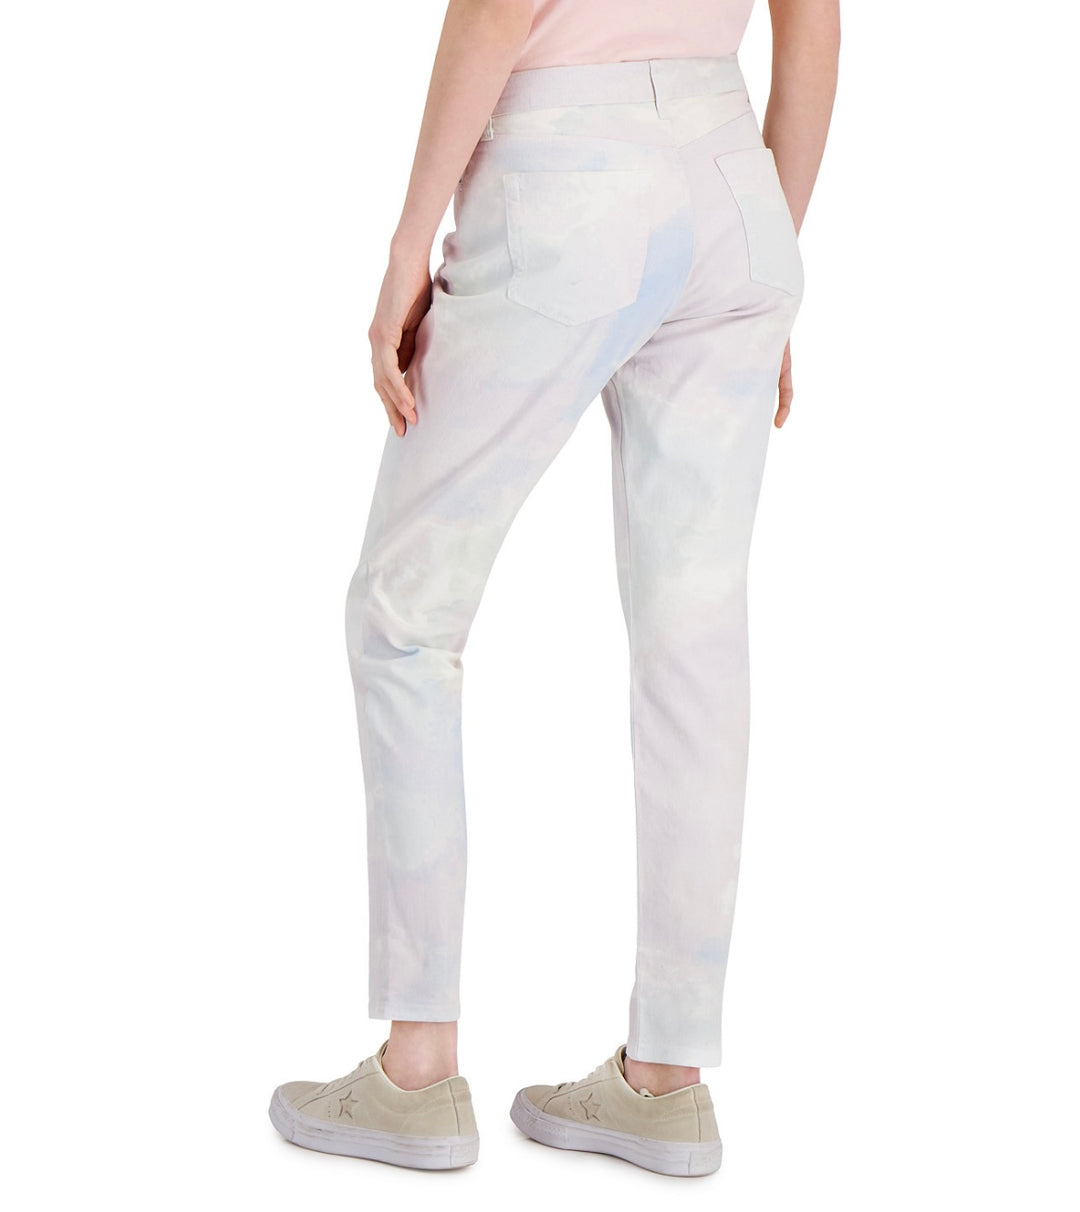 Style & Co. Women's Petite Tie-Dyed Mid-Rise Curvy Skinny Jeans Pastel Dye